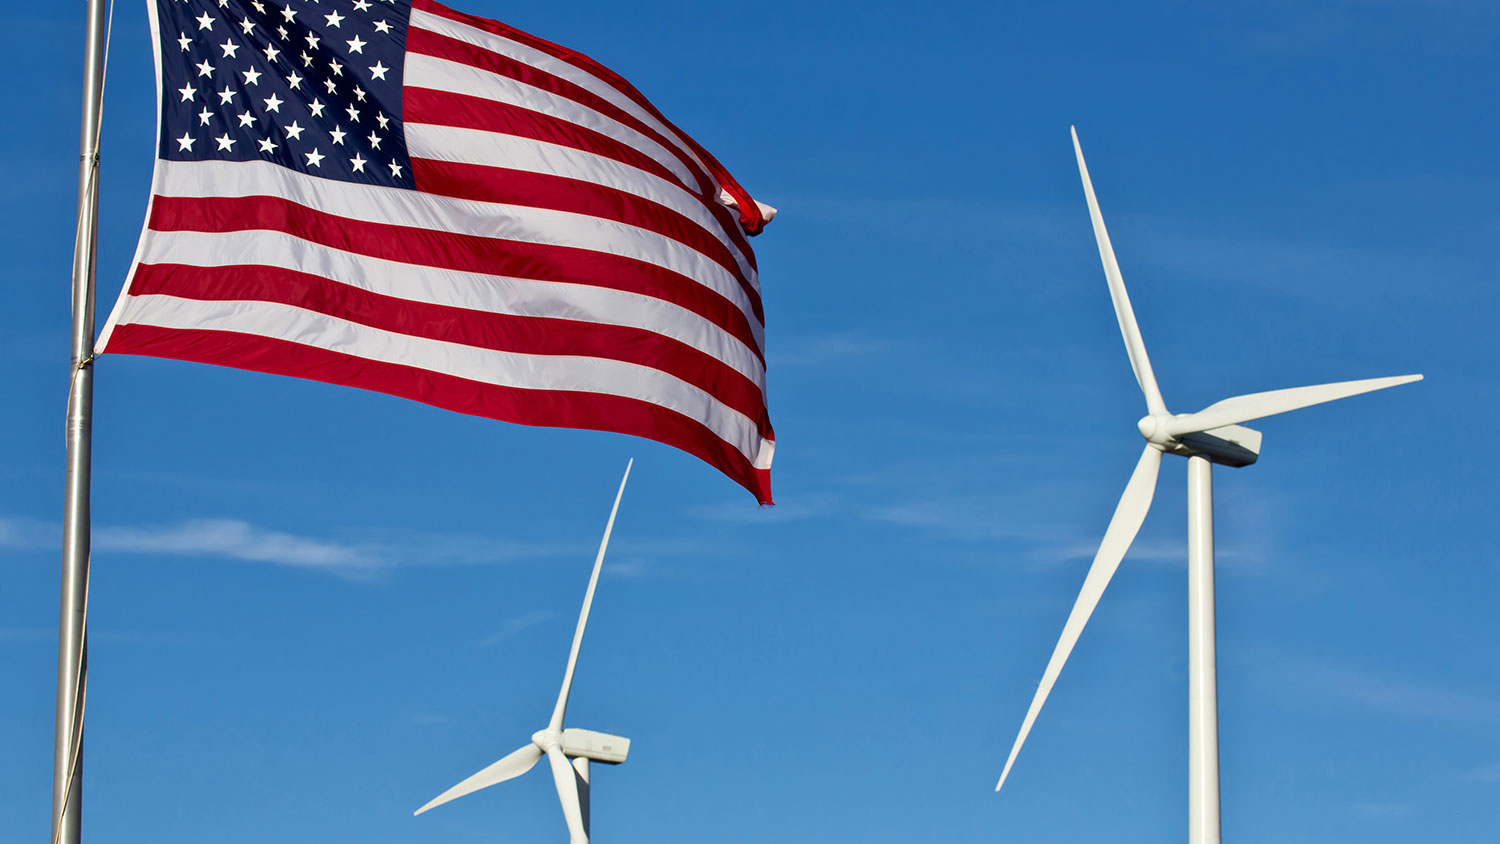 wind turbines and American flag